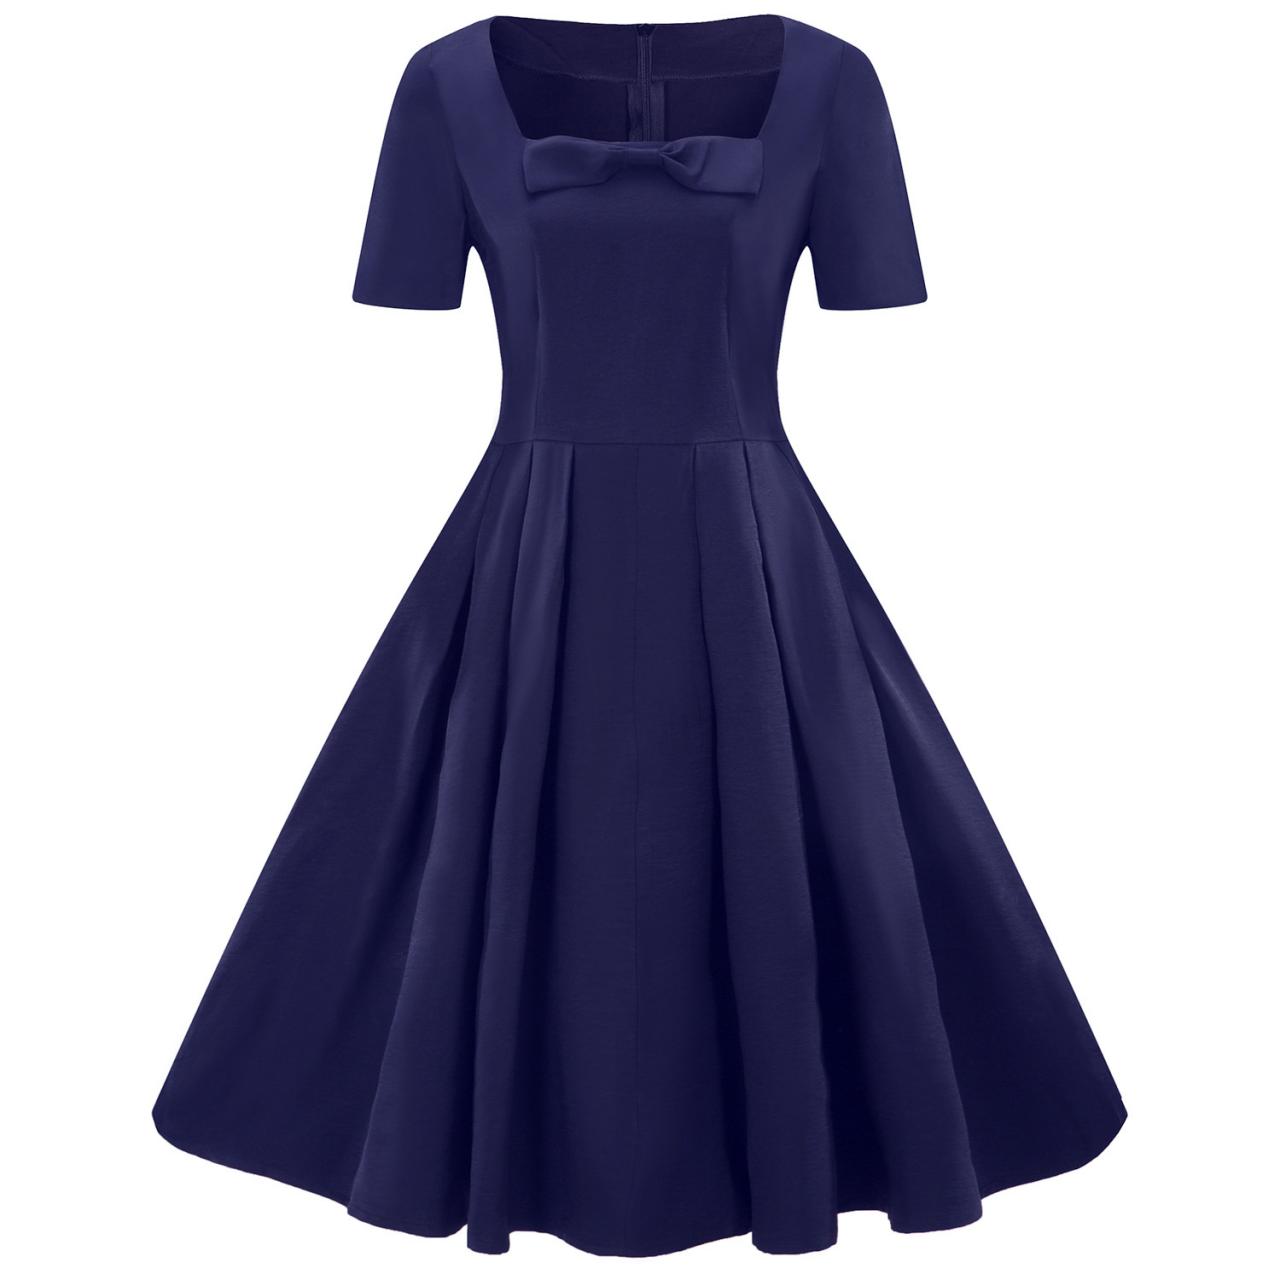 Plus Size Vintage Dress Short Sleeve Bow Square Neck Women A Line Work Party Dress navy blue